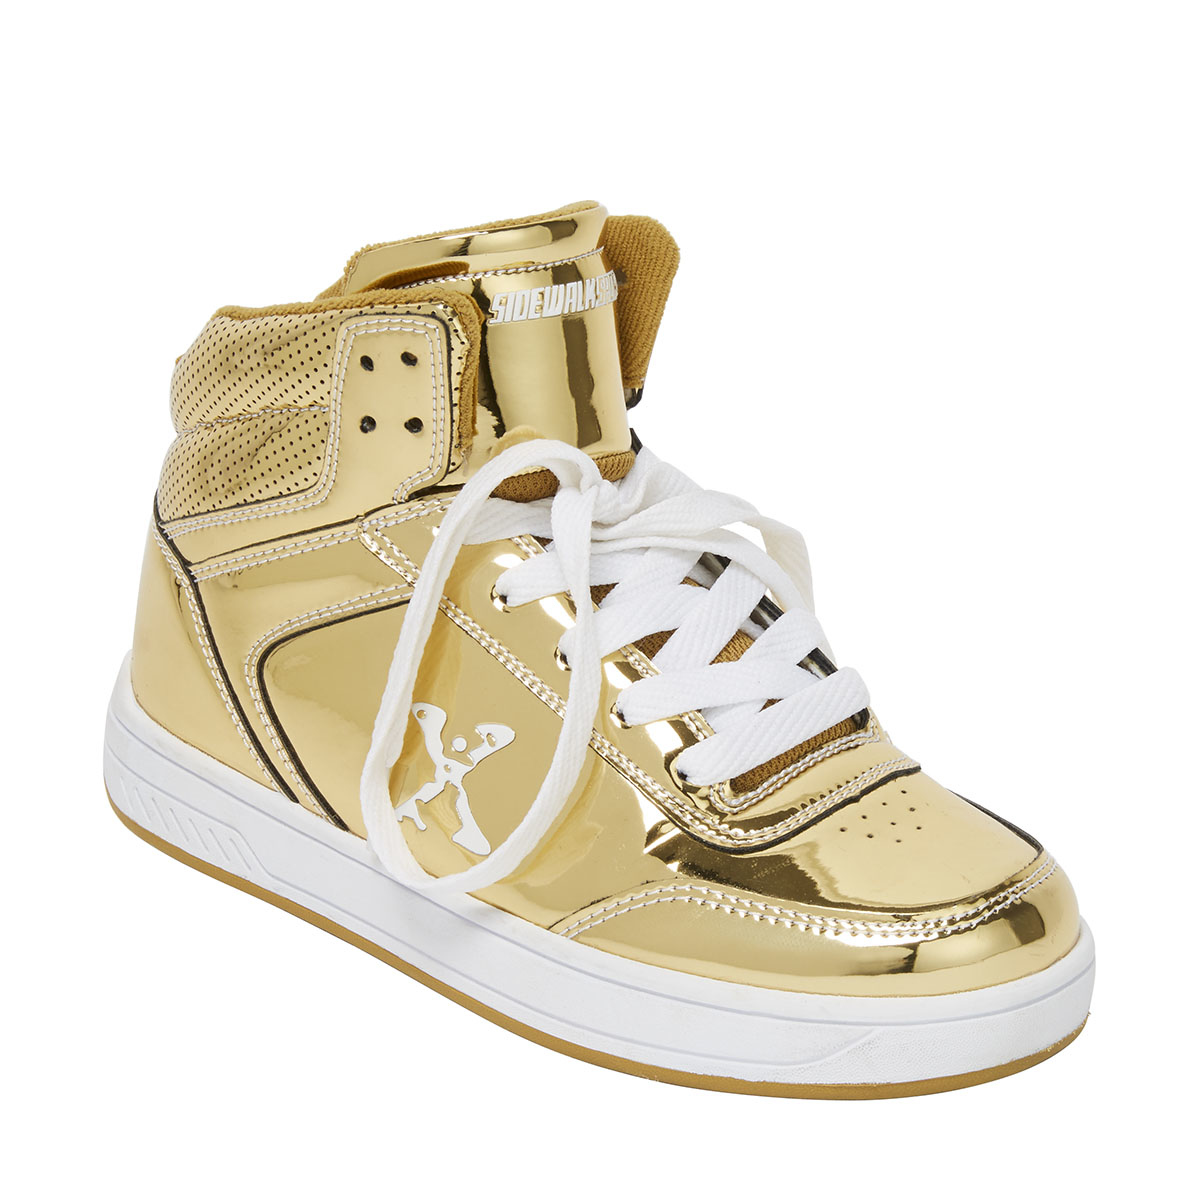 Sidewalk Sports Size 6 Metallic Gold Look Roller Shoes | Kmart